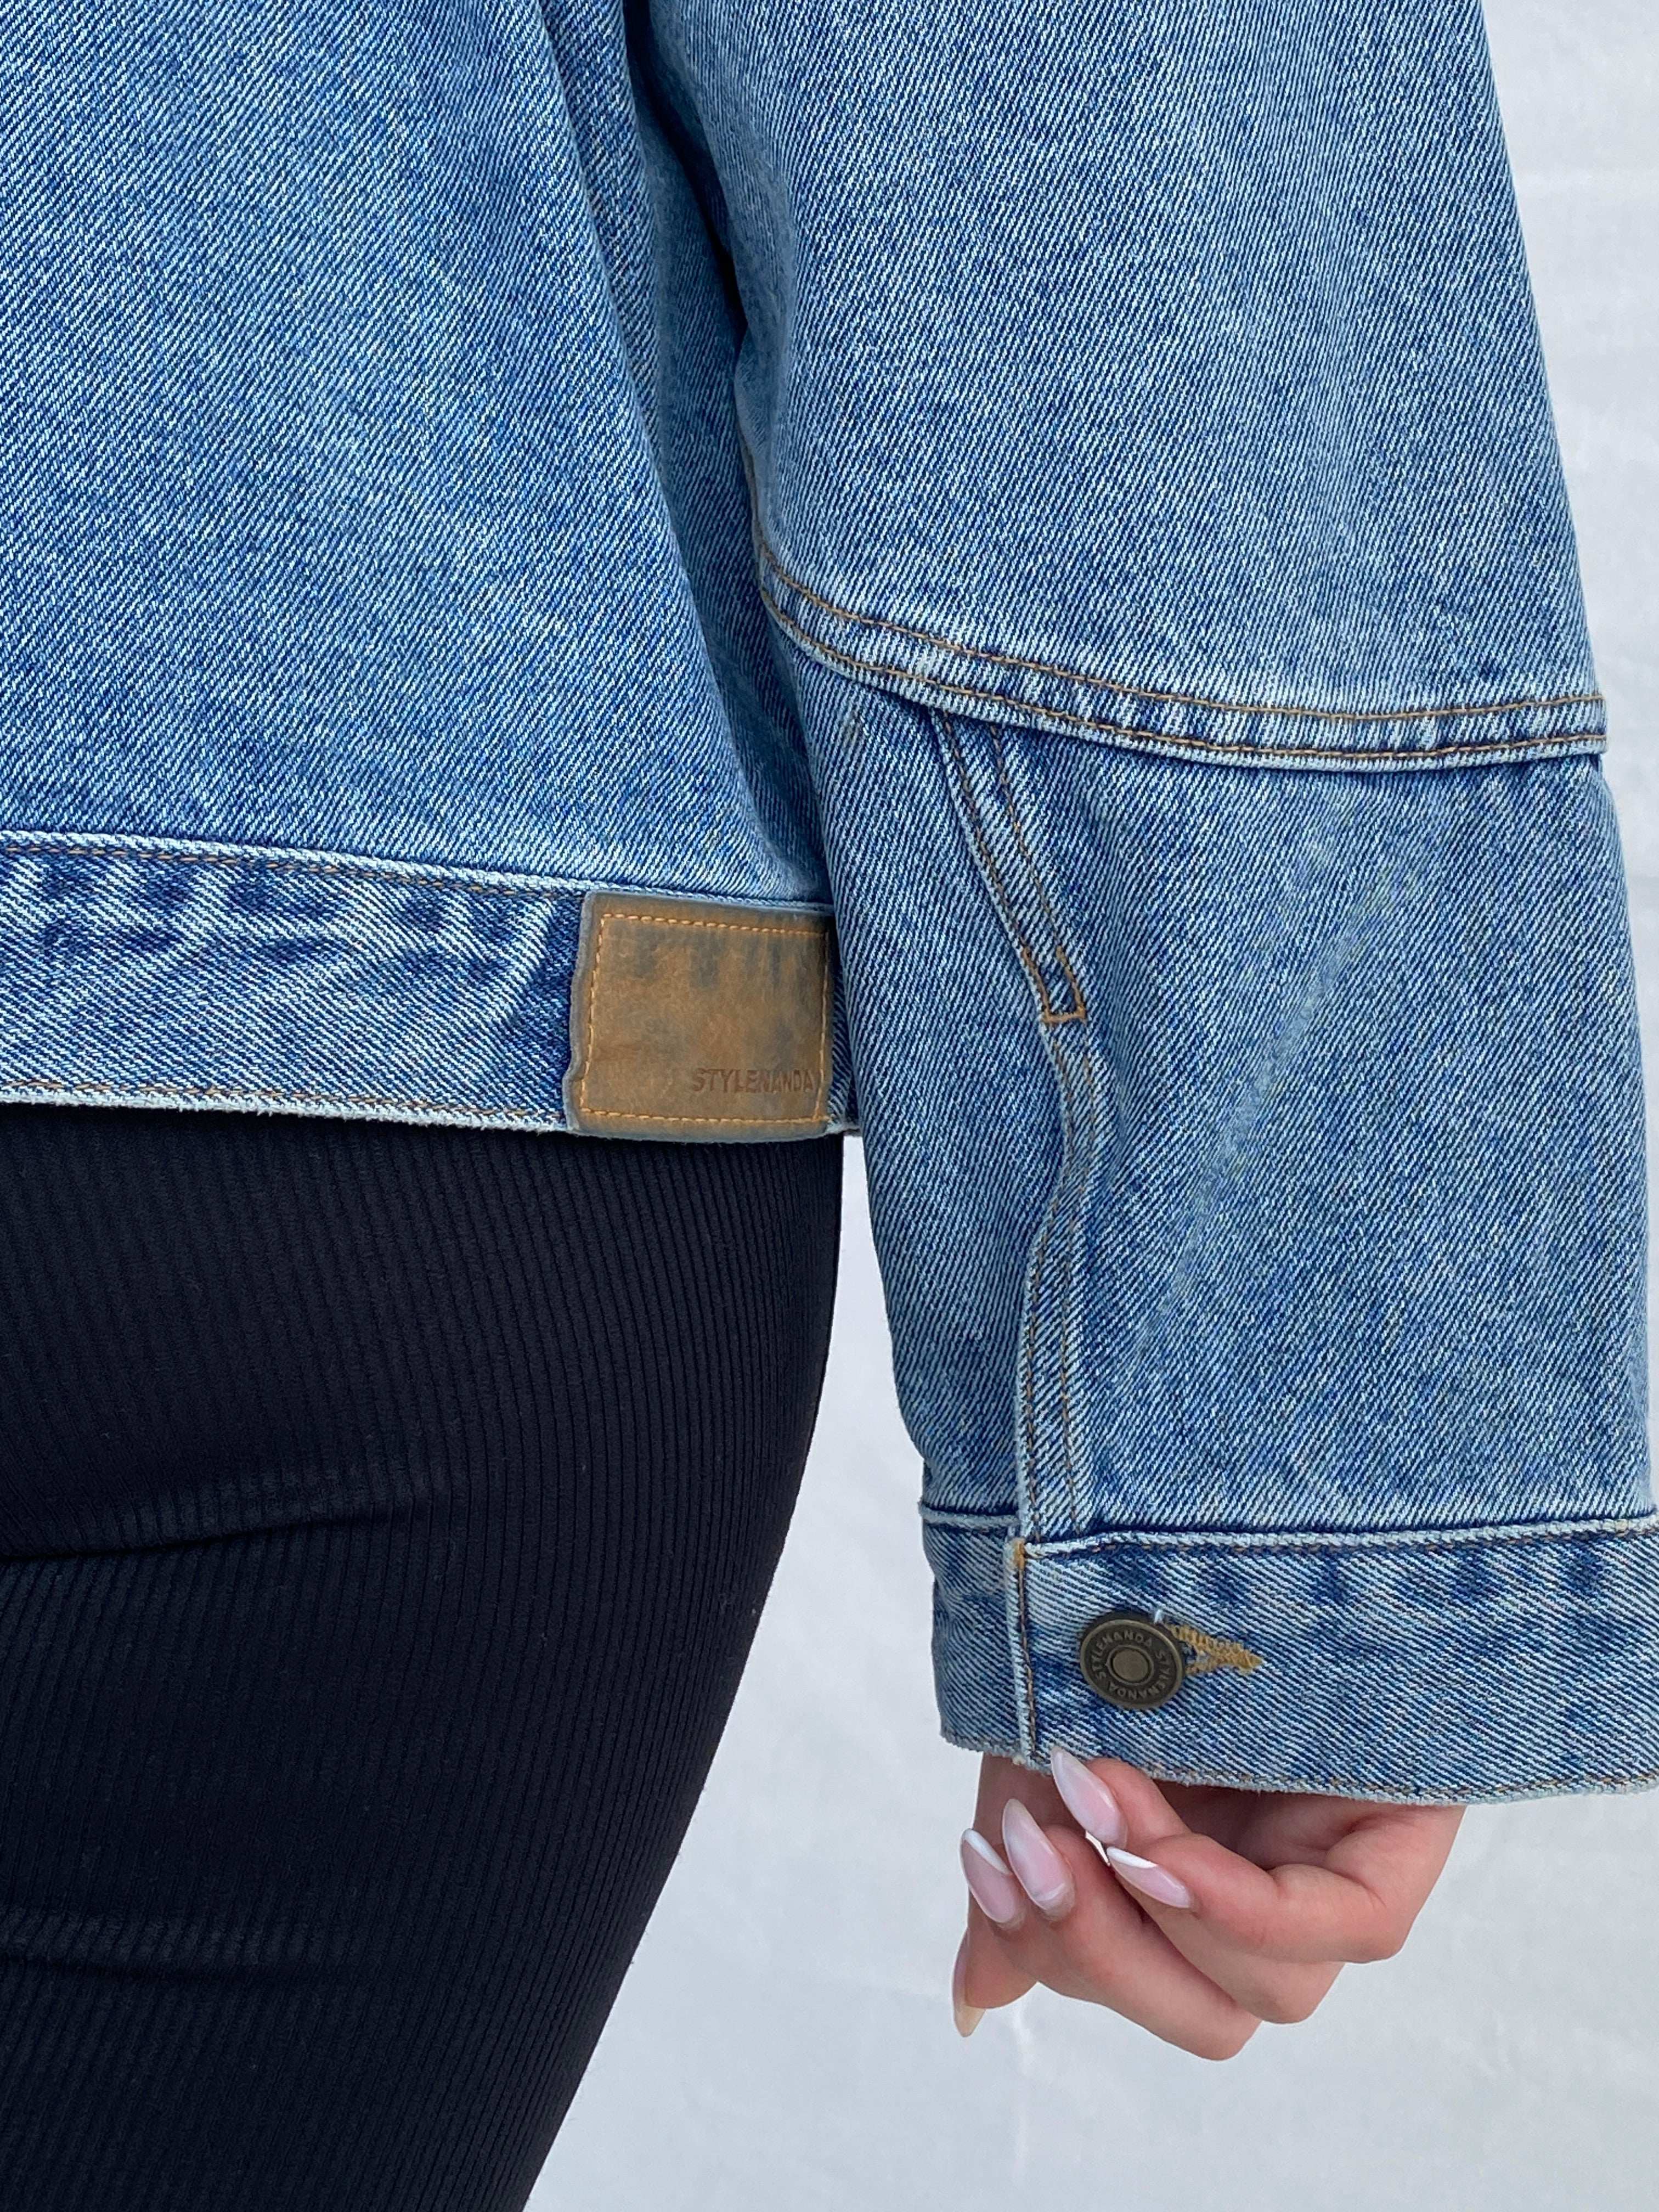 Jeans By Stylenanda Denim Jacket - Size M/L - Balagan Vintage Denim Jacket 00s, denim jacket, Juana